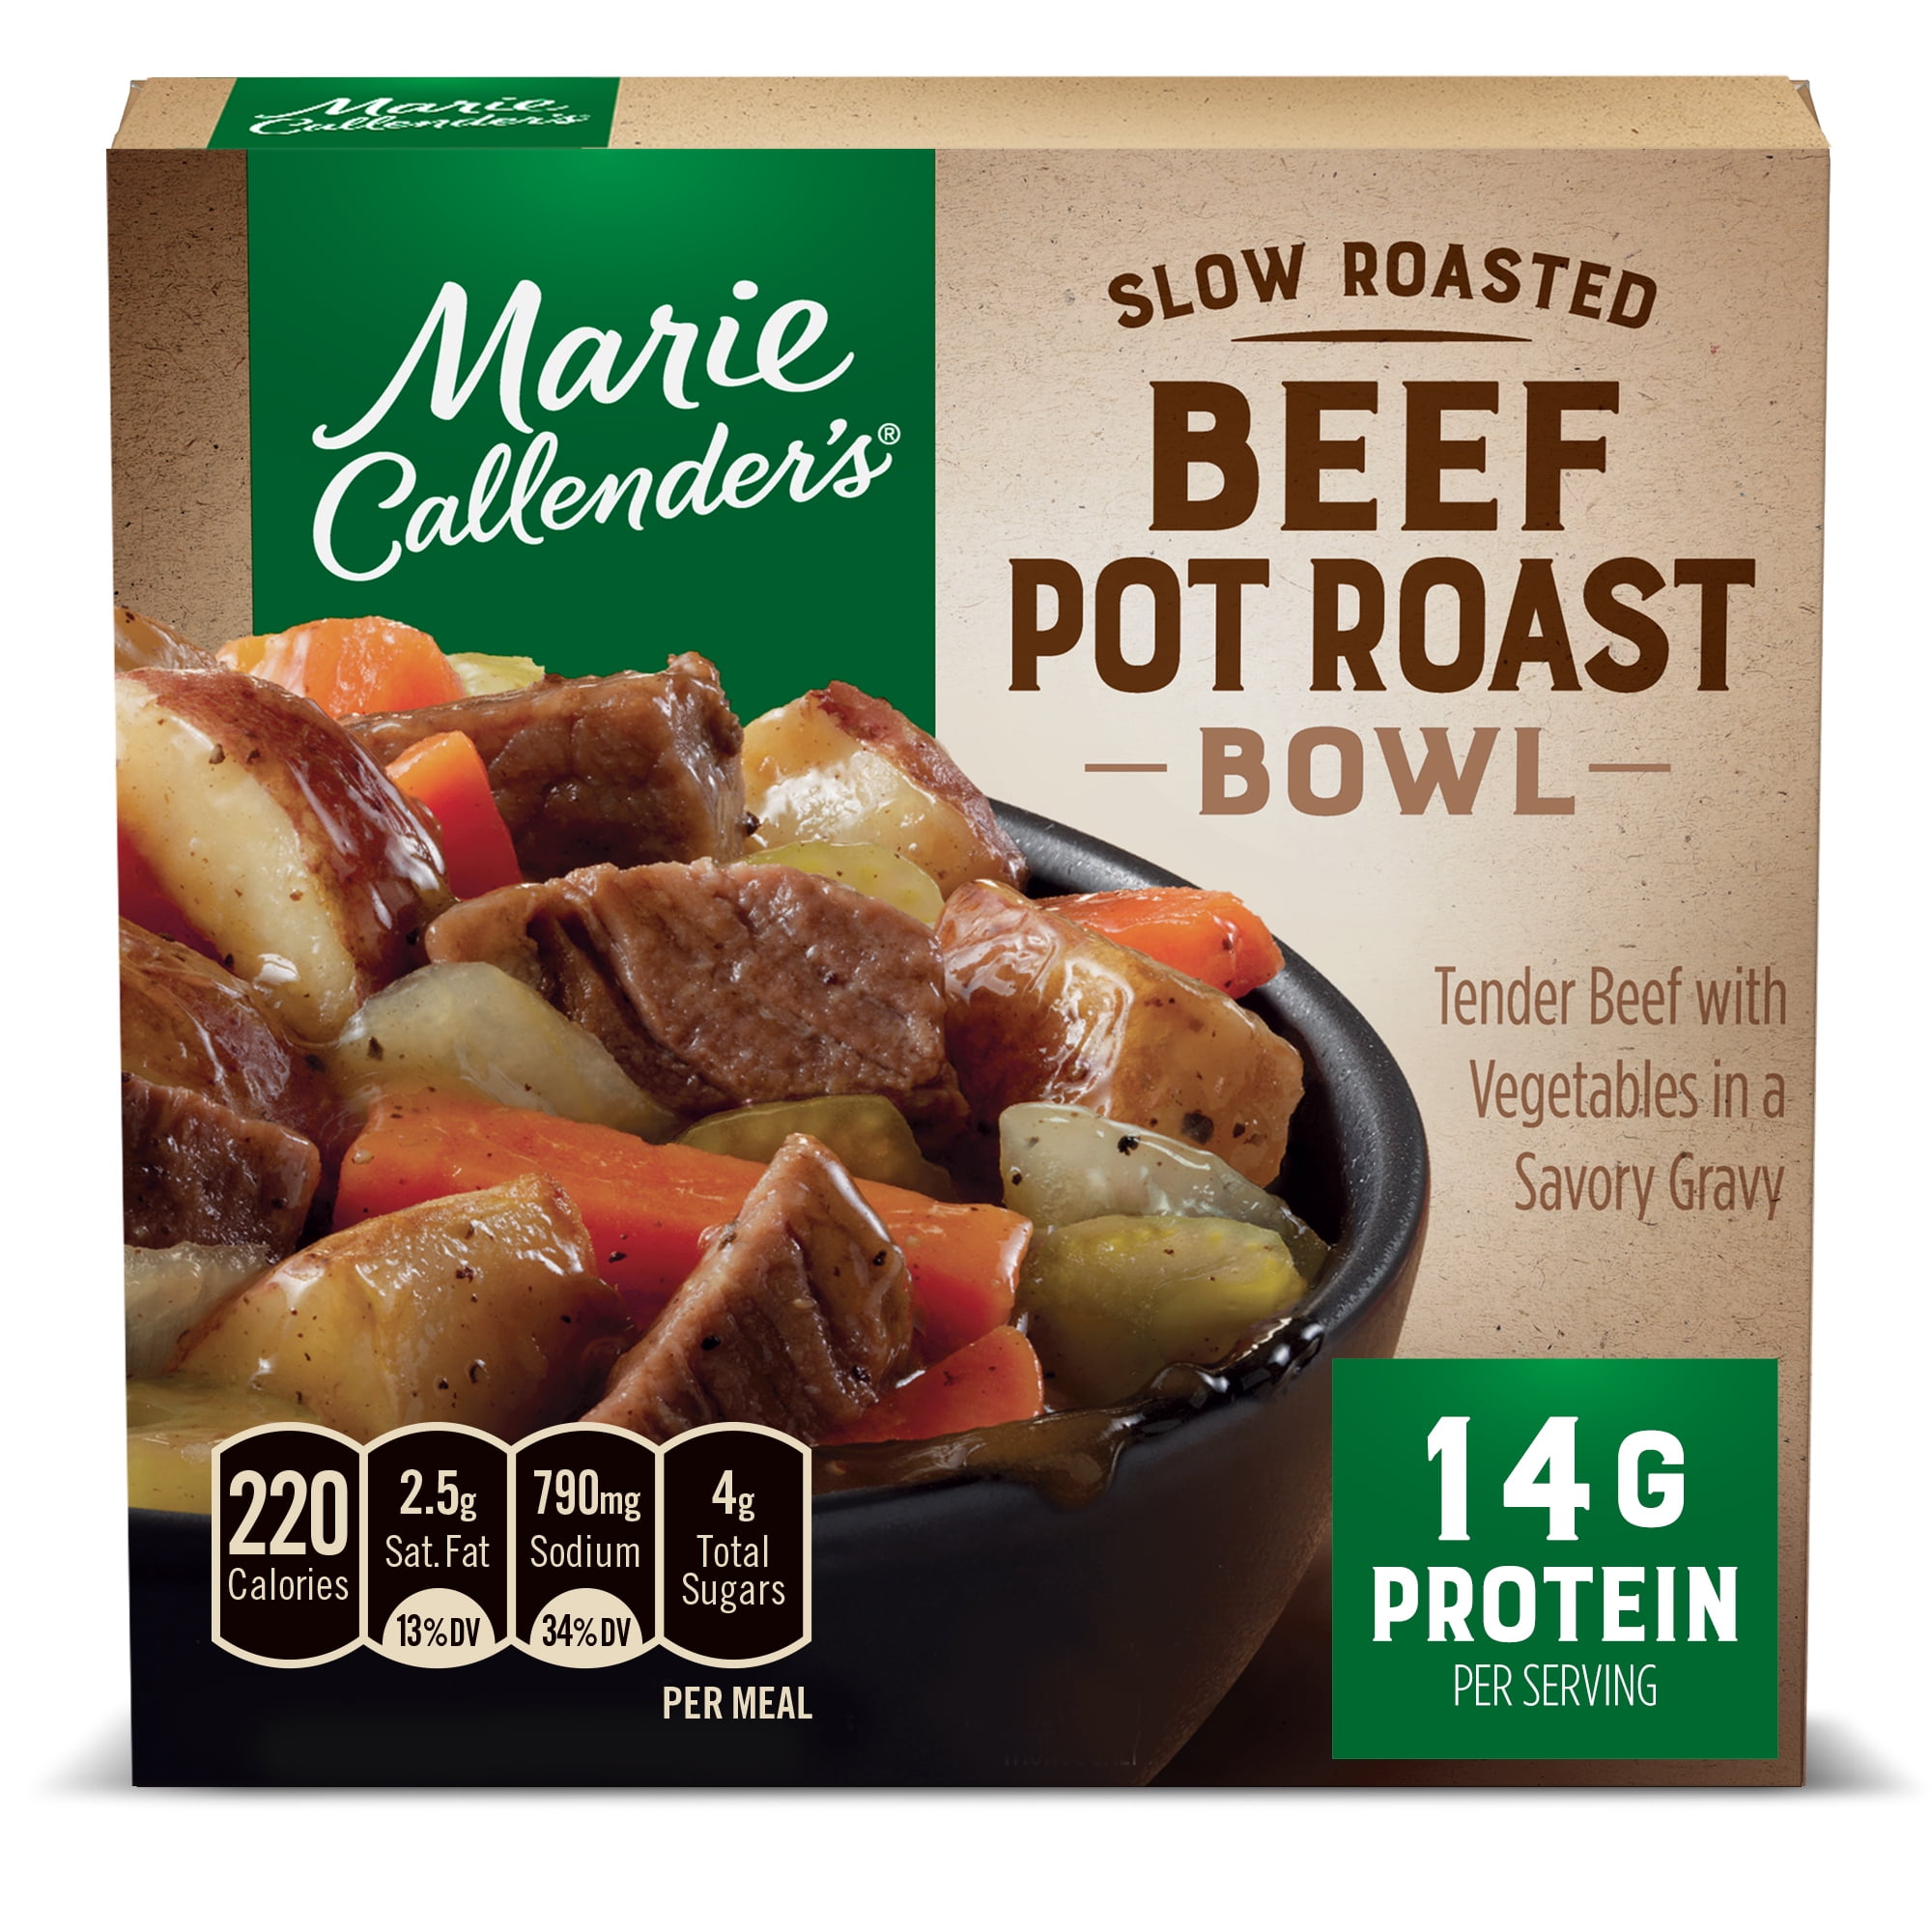 Marie Callender's Slow Roasted Beef Pot Roast Bowl, Frozen Meals, 11 oz. - Walmart.com - Walmart.com